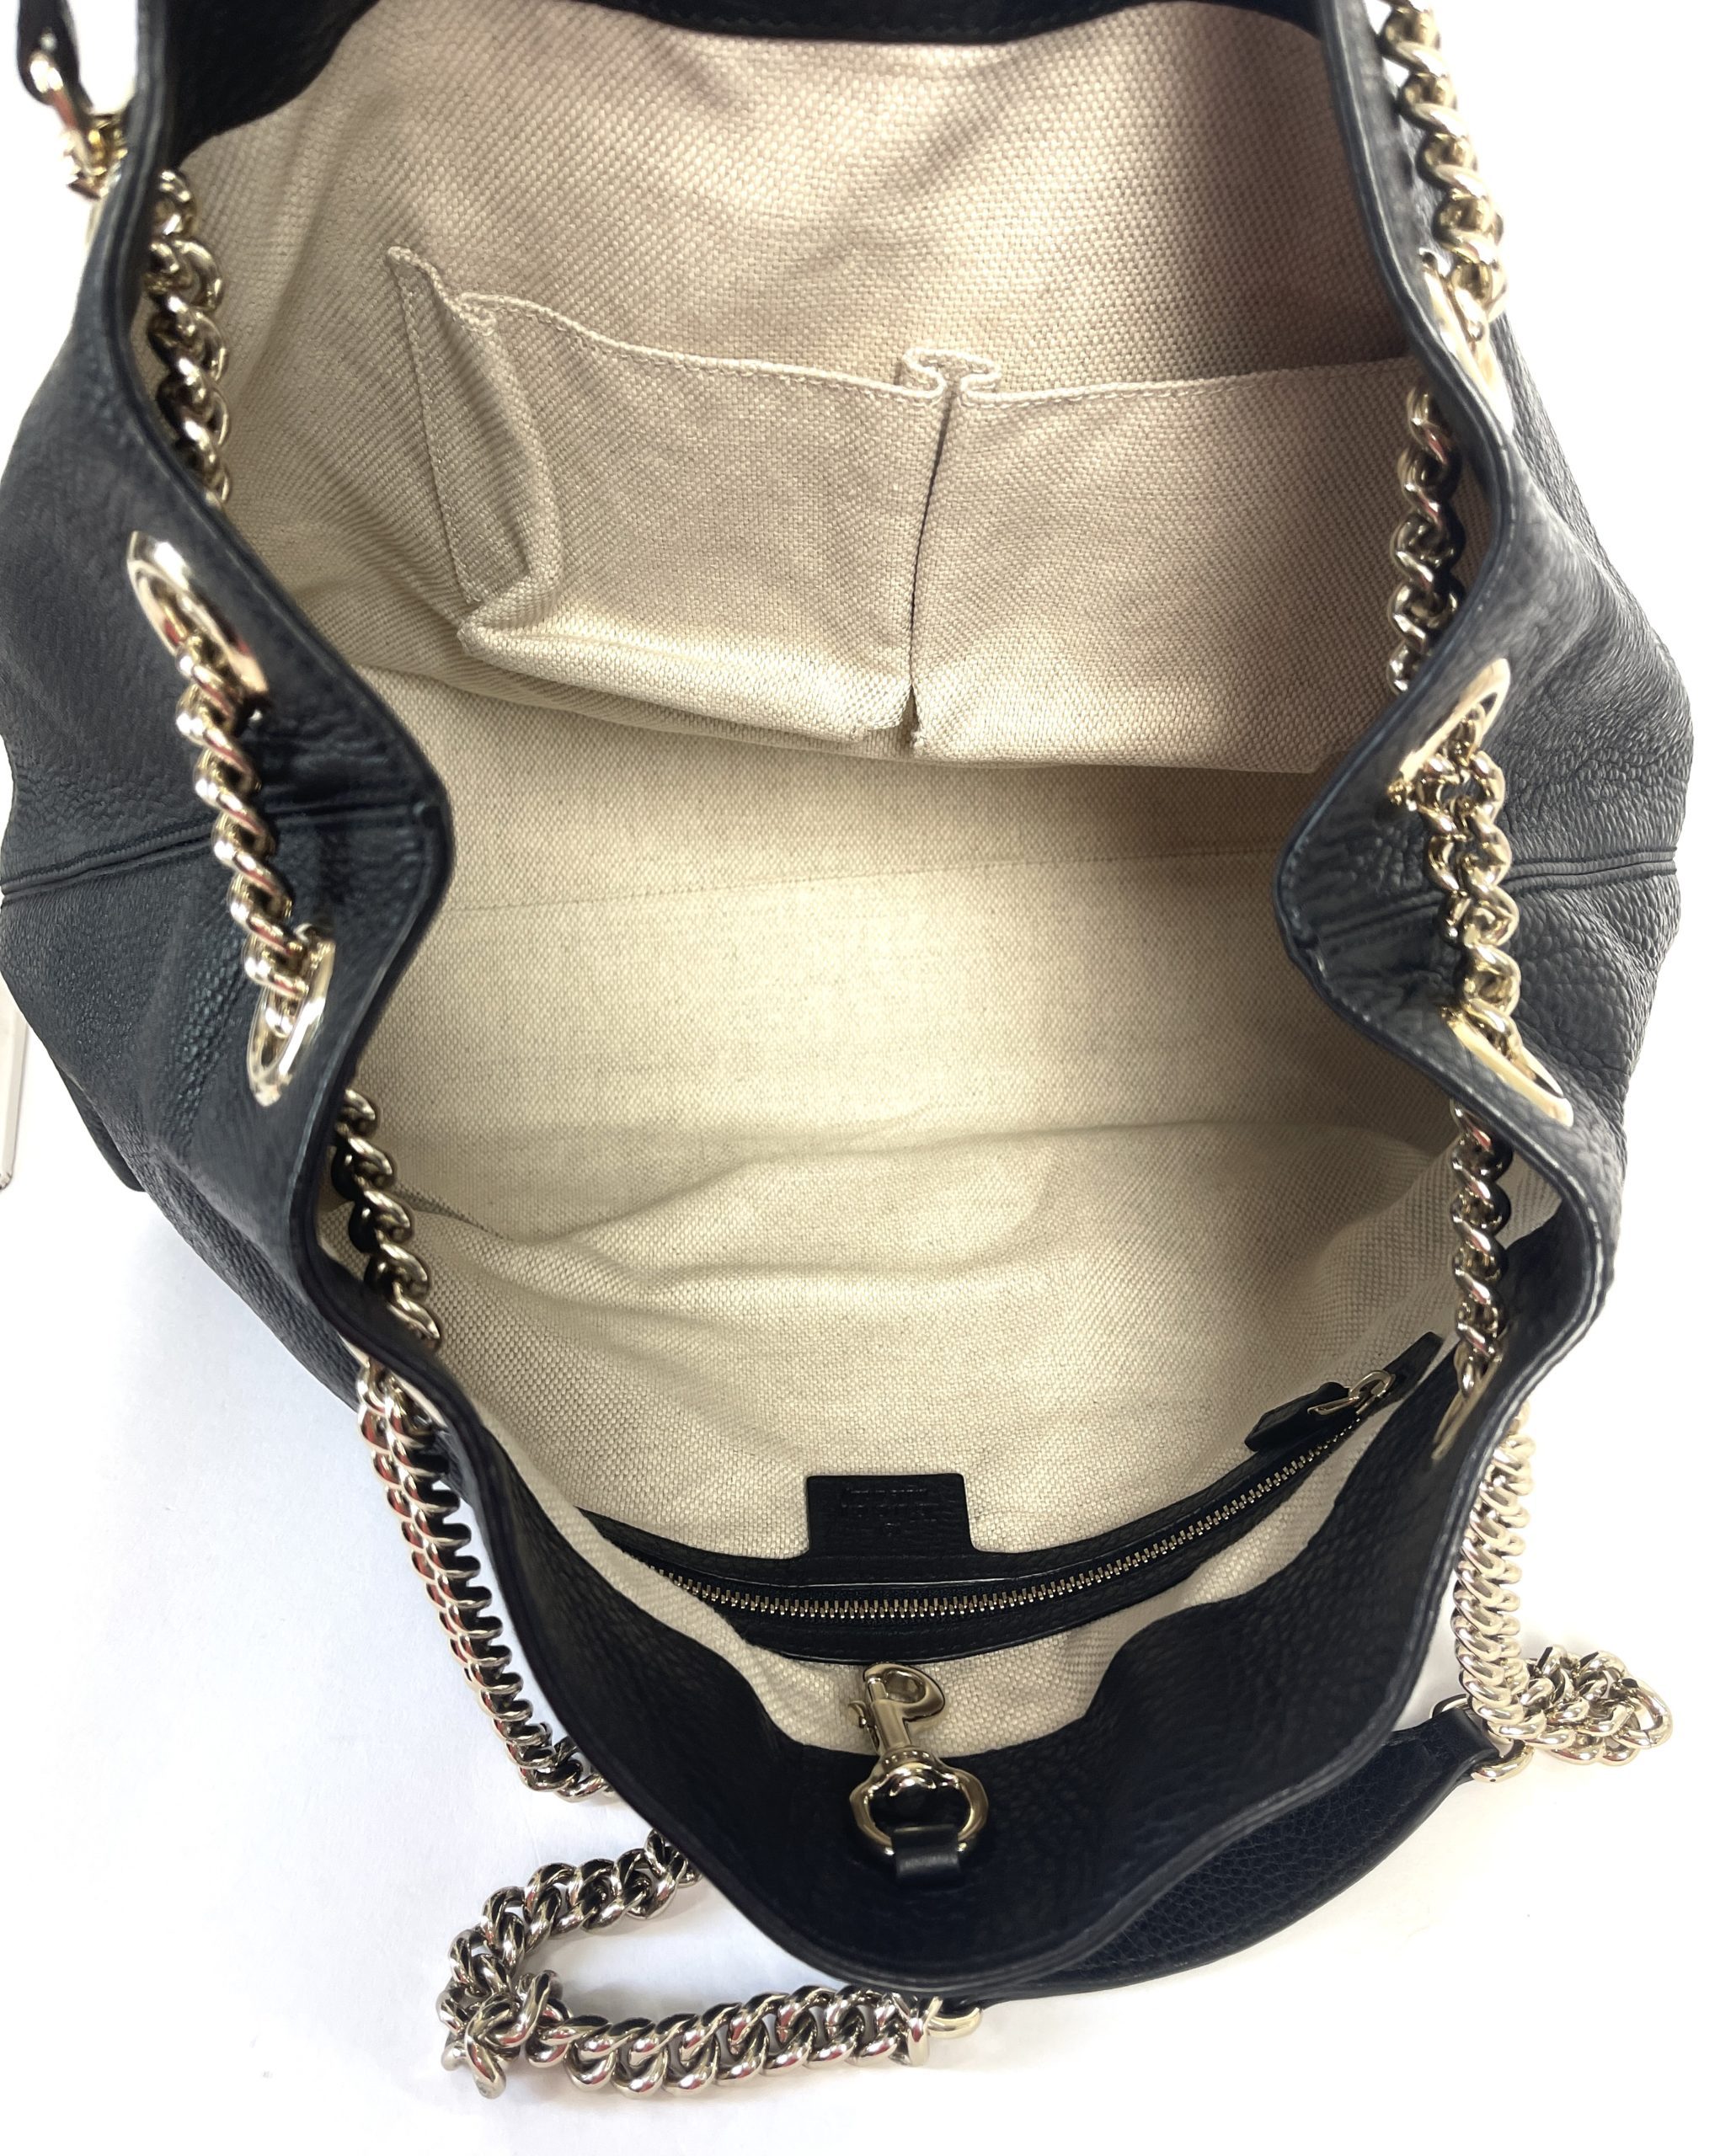  Gucci Soho Large Leather Chain Shoulder Handbag Black